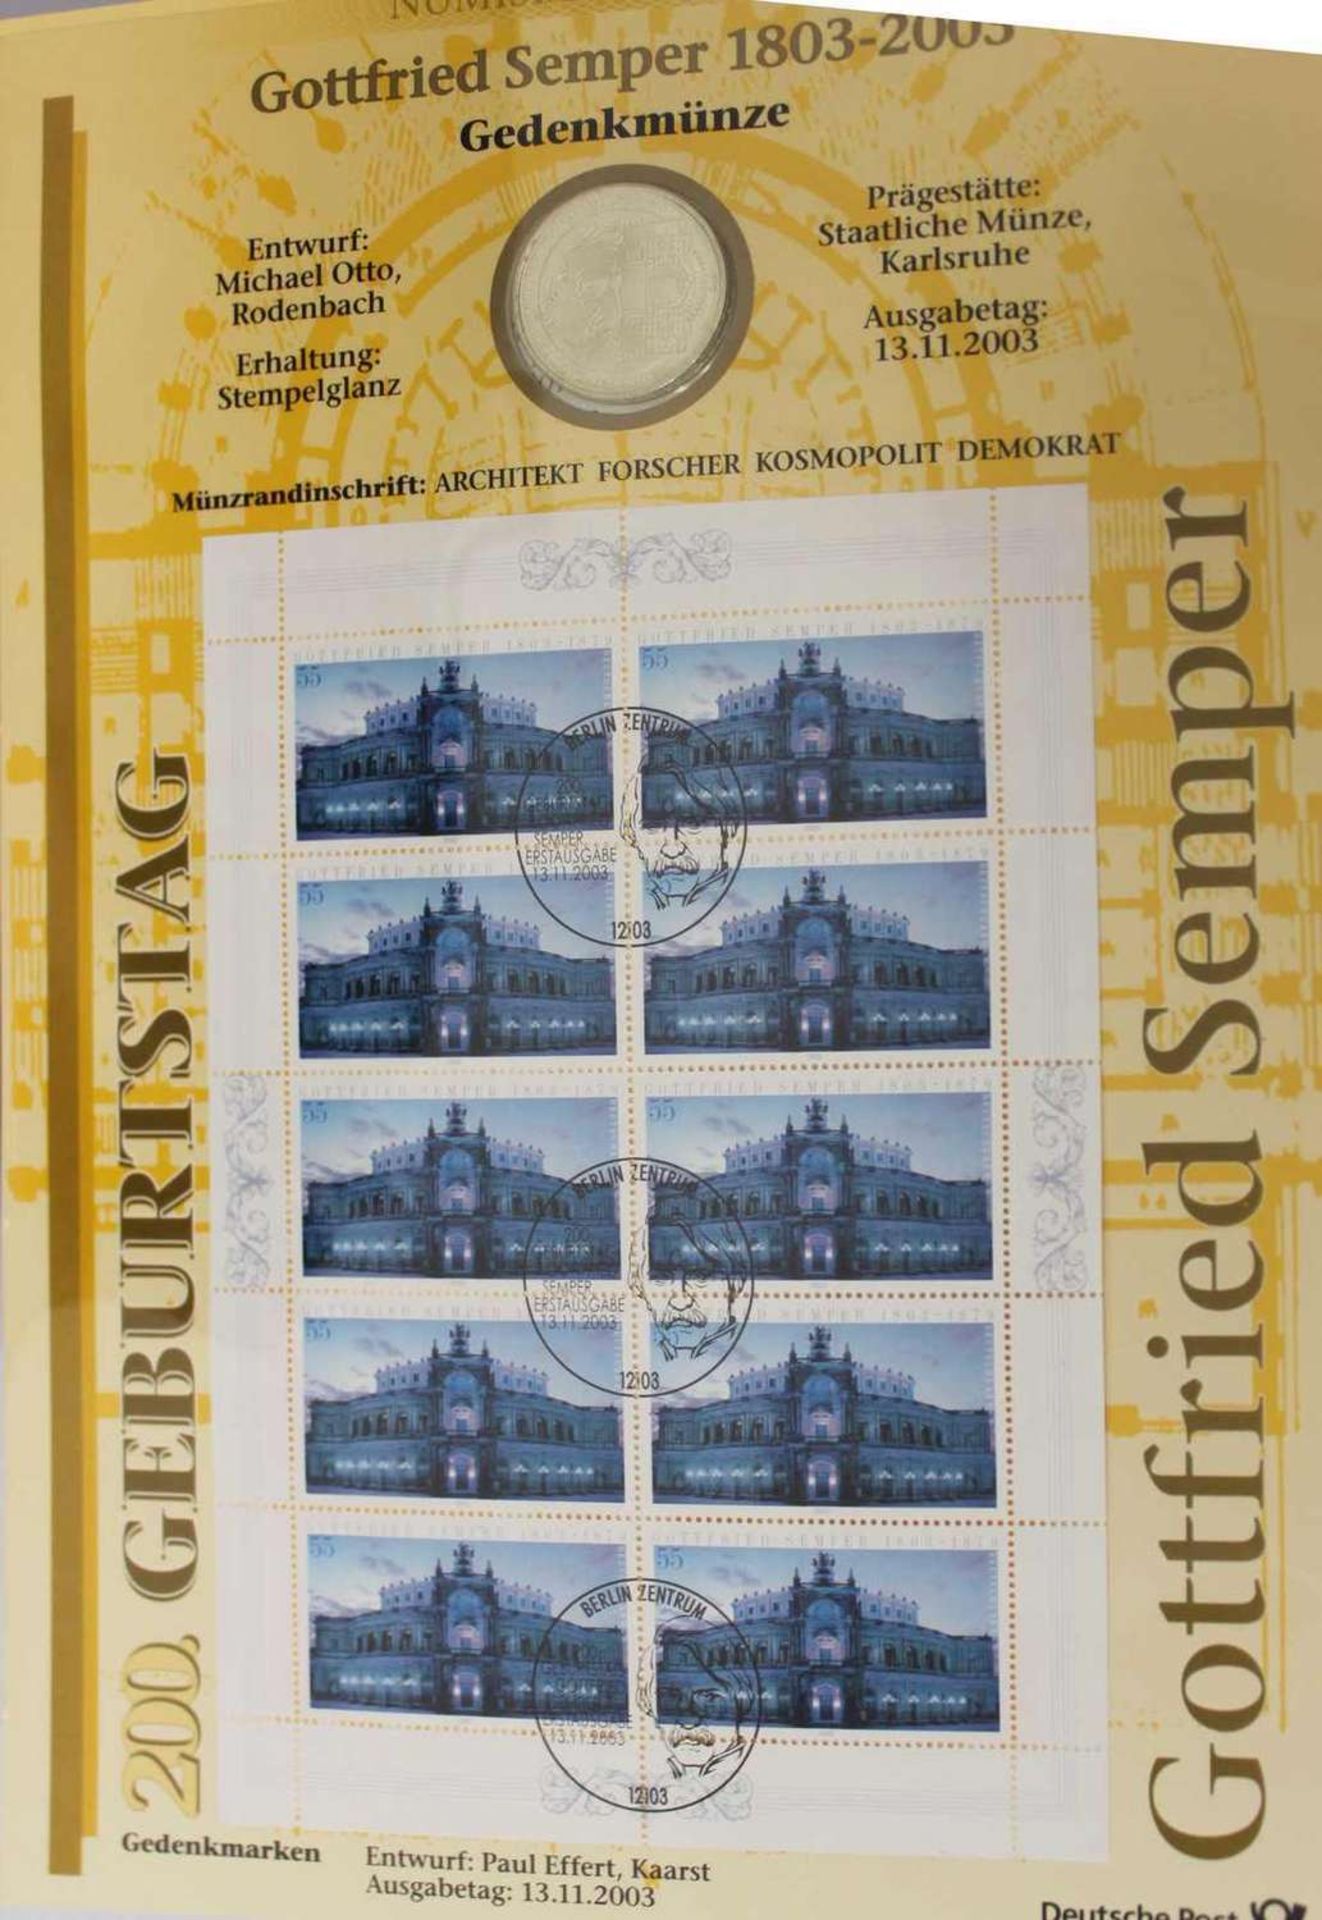 Sammlung Numisblätter, Nummern: 1/2003, 2/2003, 3/2003, 5/2003, 6/2003, 1/2002, 2/2002, 3/02, 4/